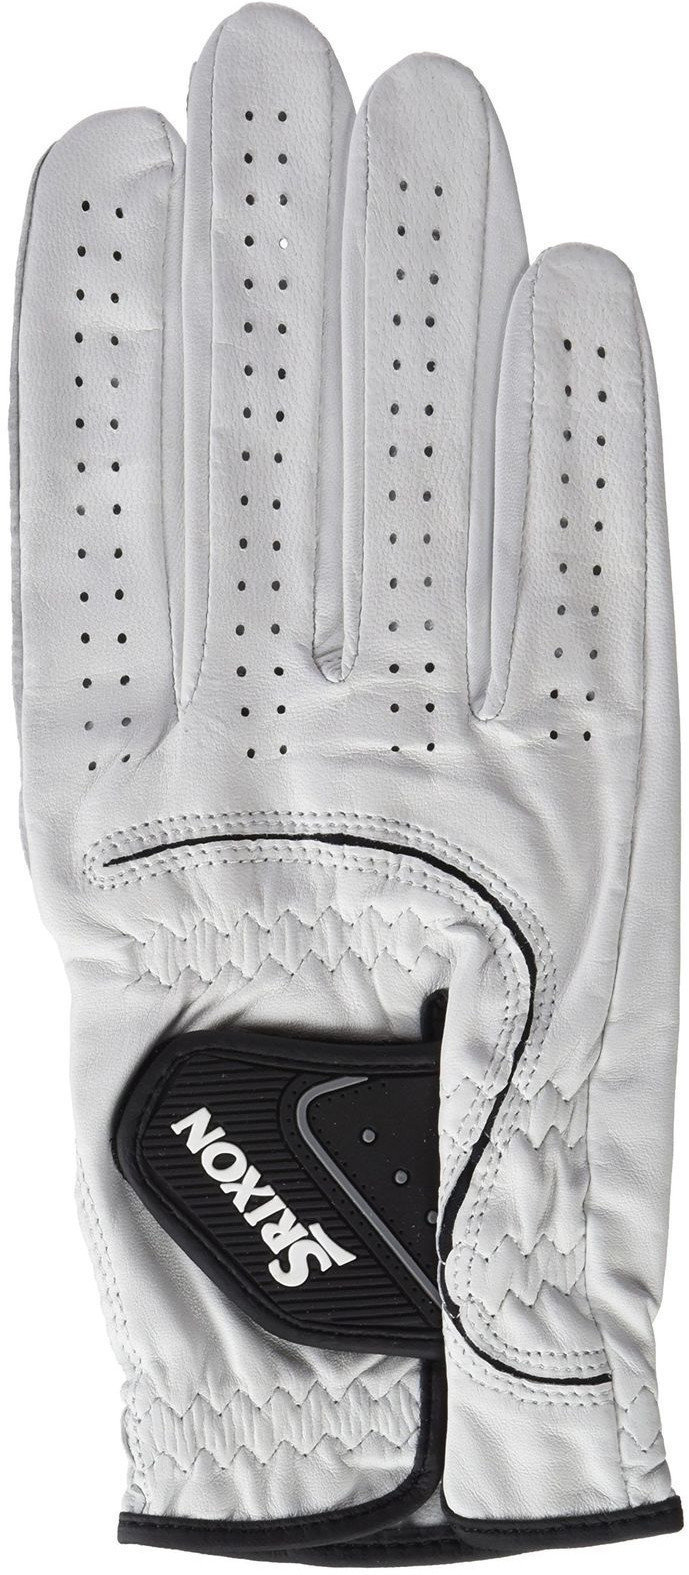 Handschuhe Srixon Leather Glove Wht M